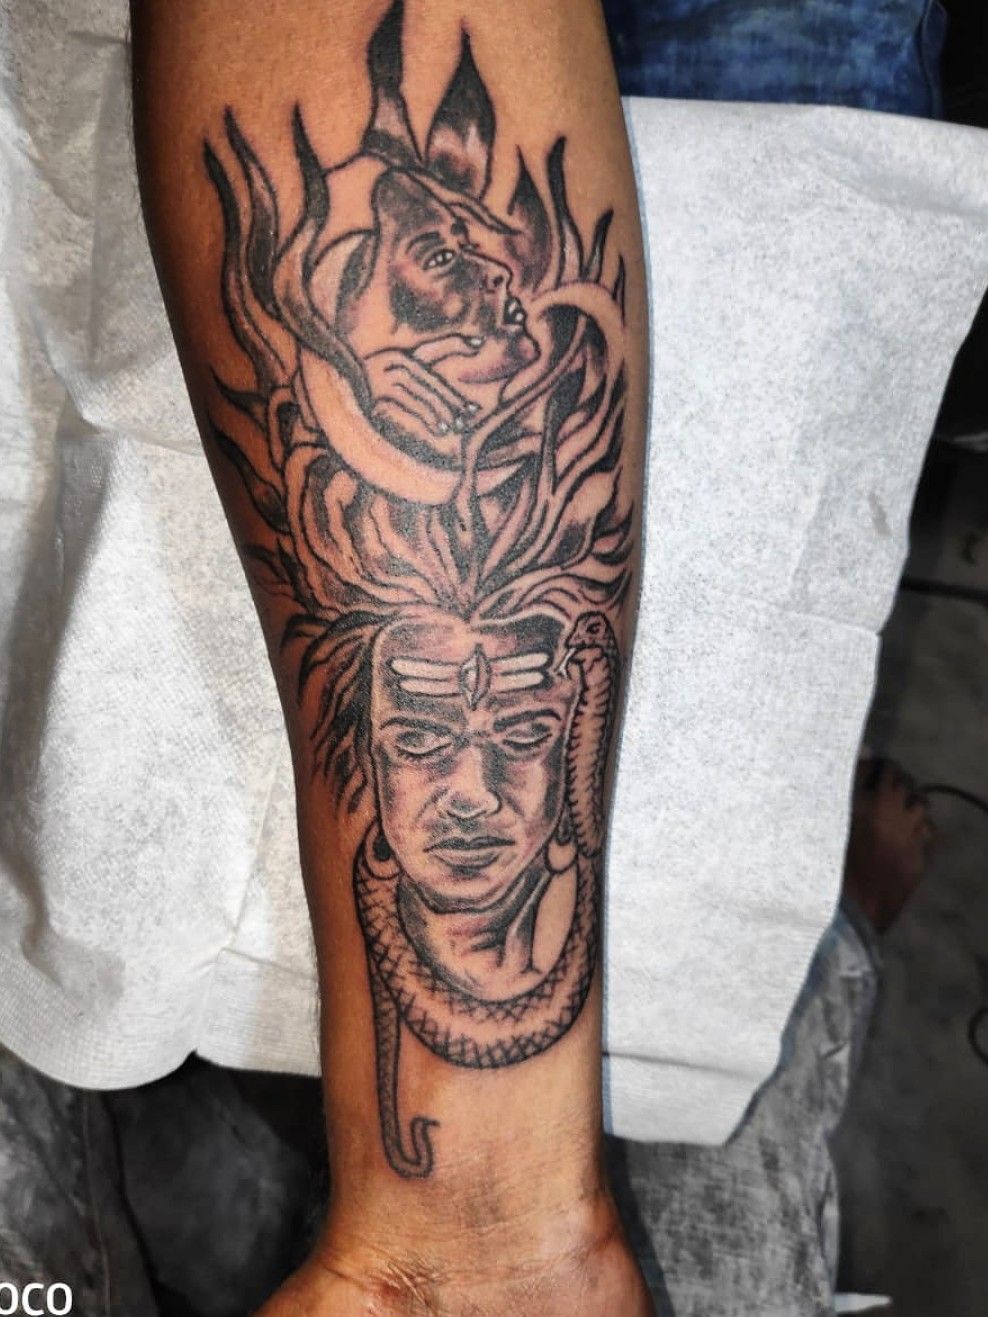 Tattoo uploaded by Samurai Tattoo mehsana  Mahadev tattoo Shiva tattoo  Bholenath tattoo Shiva tattoo ideas Smoking shiva tattoo  Tattoodo